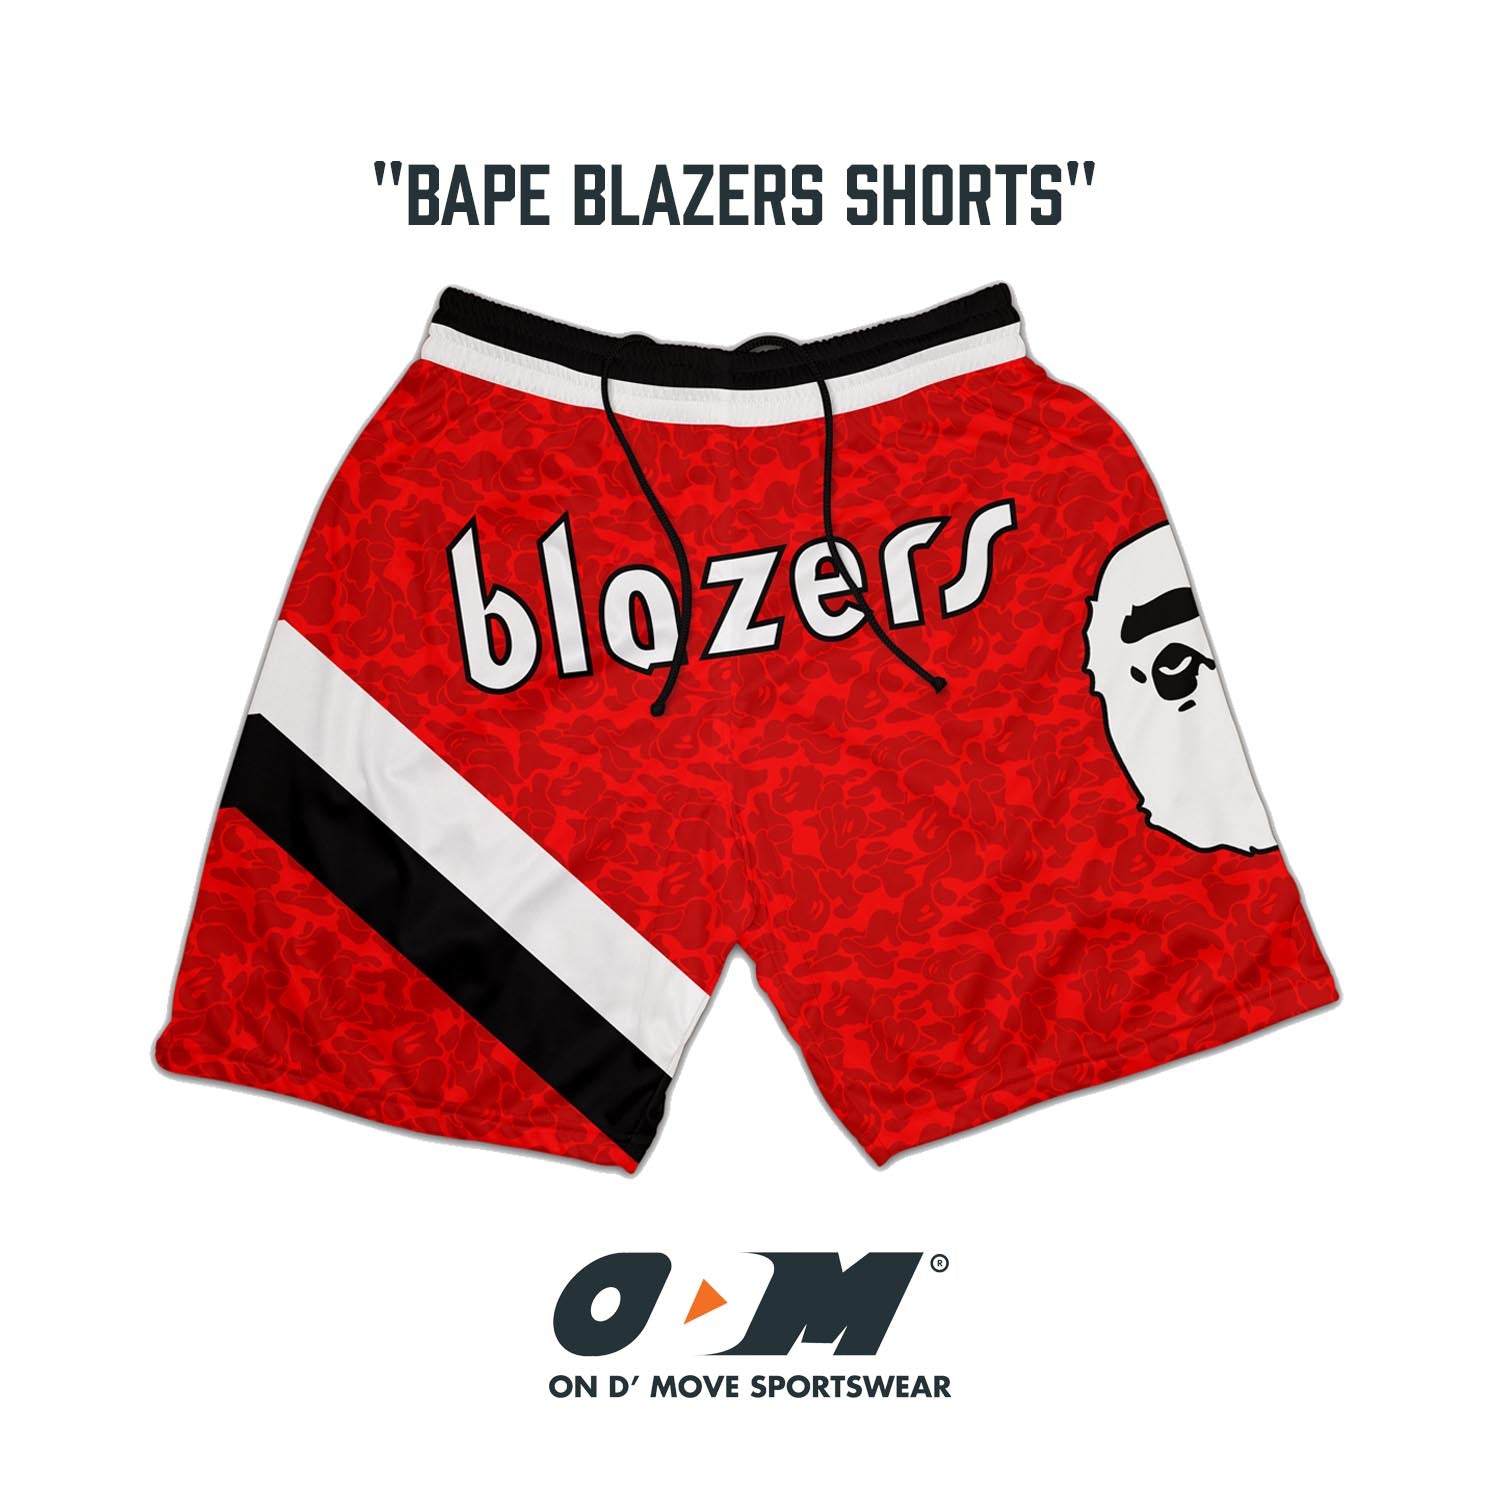 BAPE Blazers Shorts